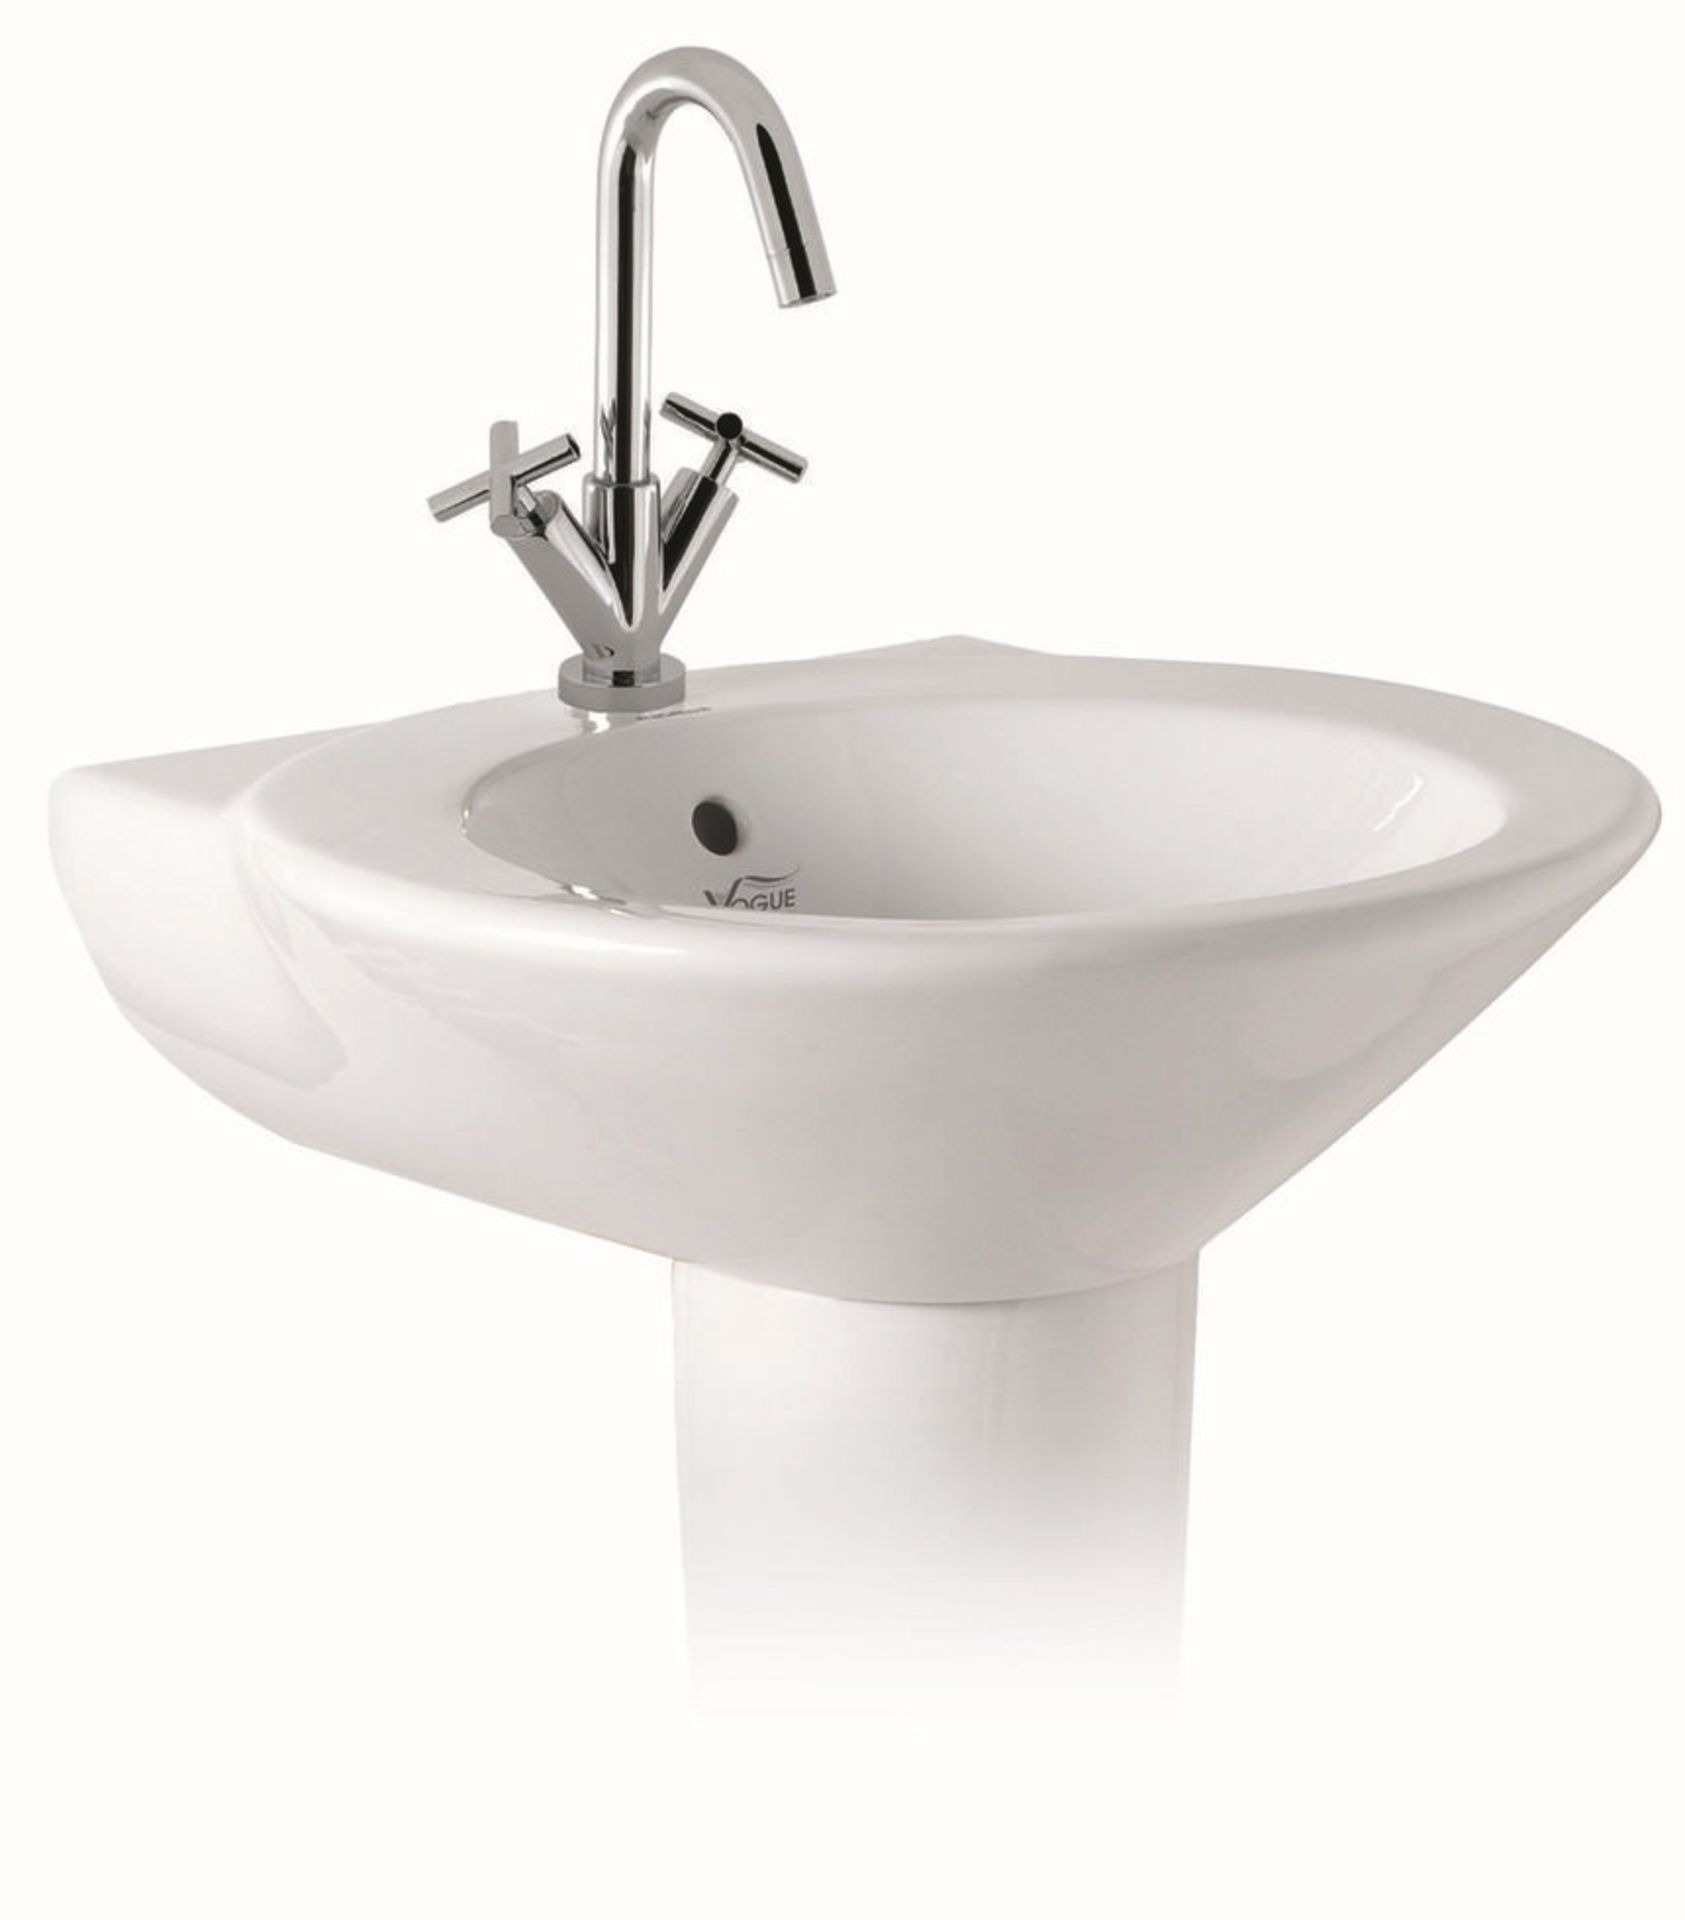 1 x Vogue Bathrooms TEFELI Single Tap Hole Bathroom SINK BASIN with Pedestal - 550mm Width - Brand